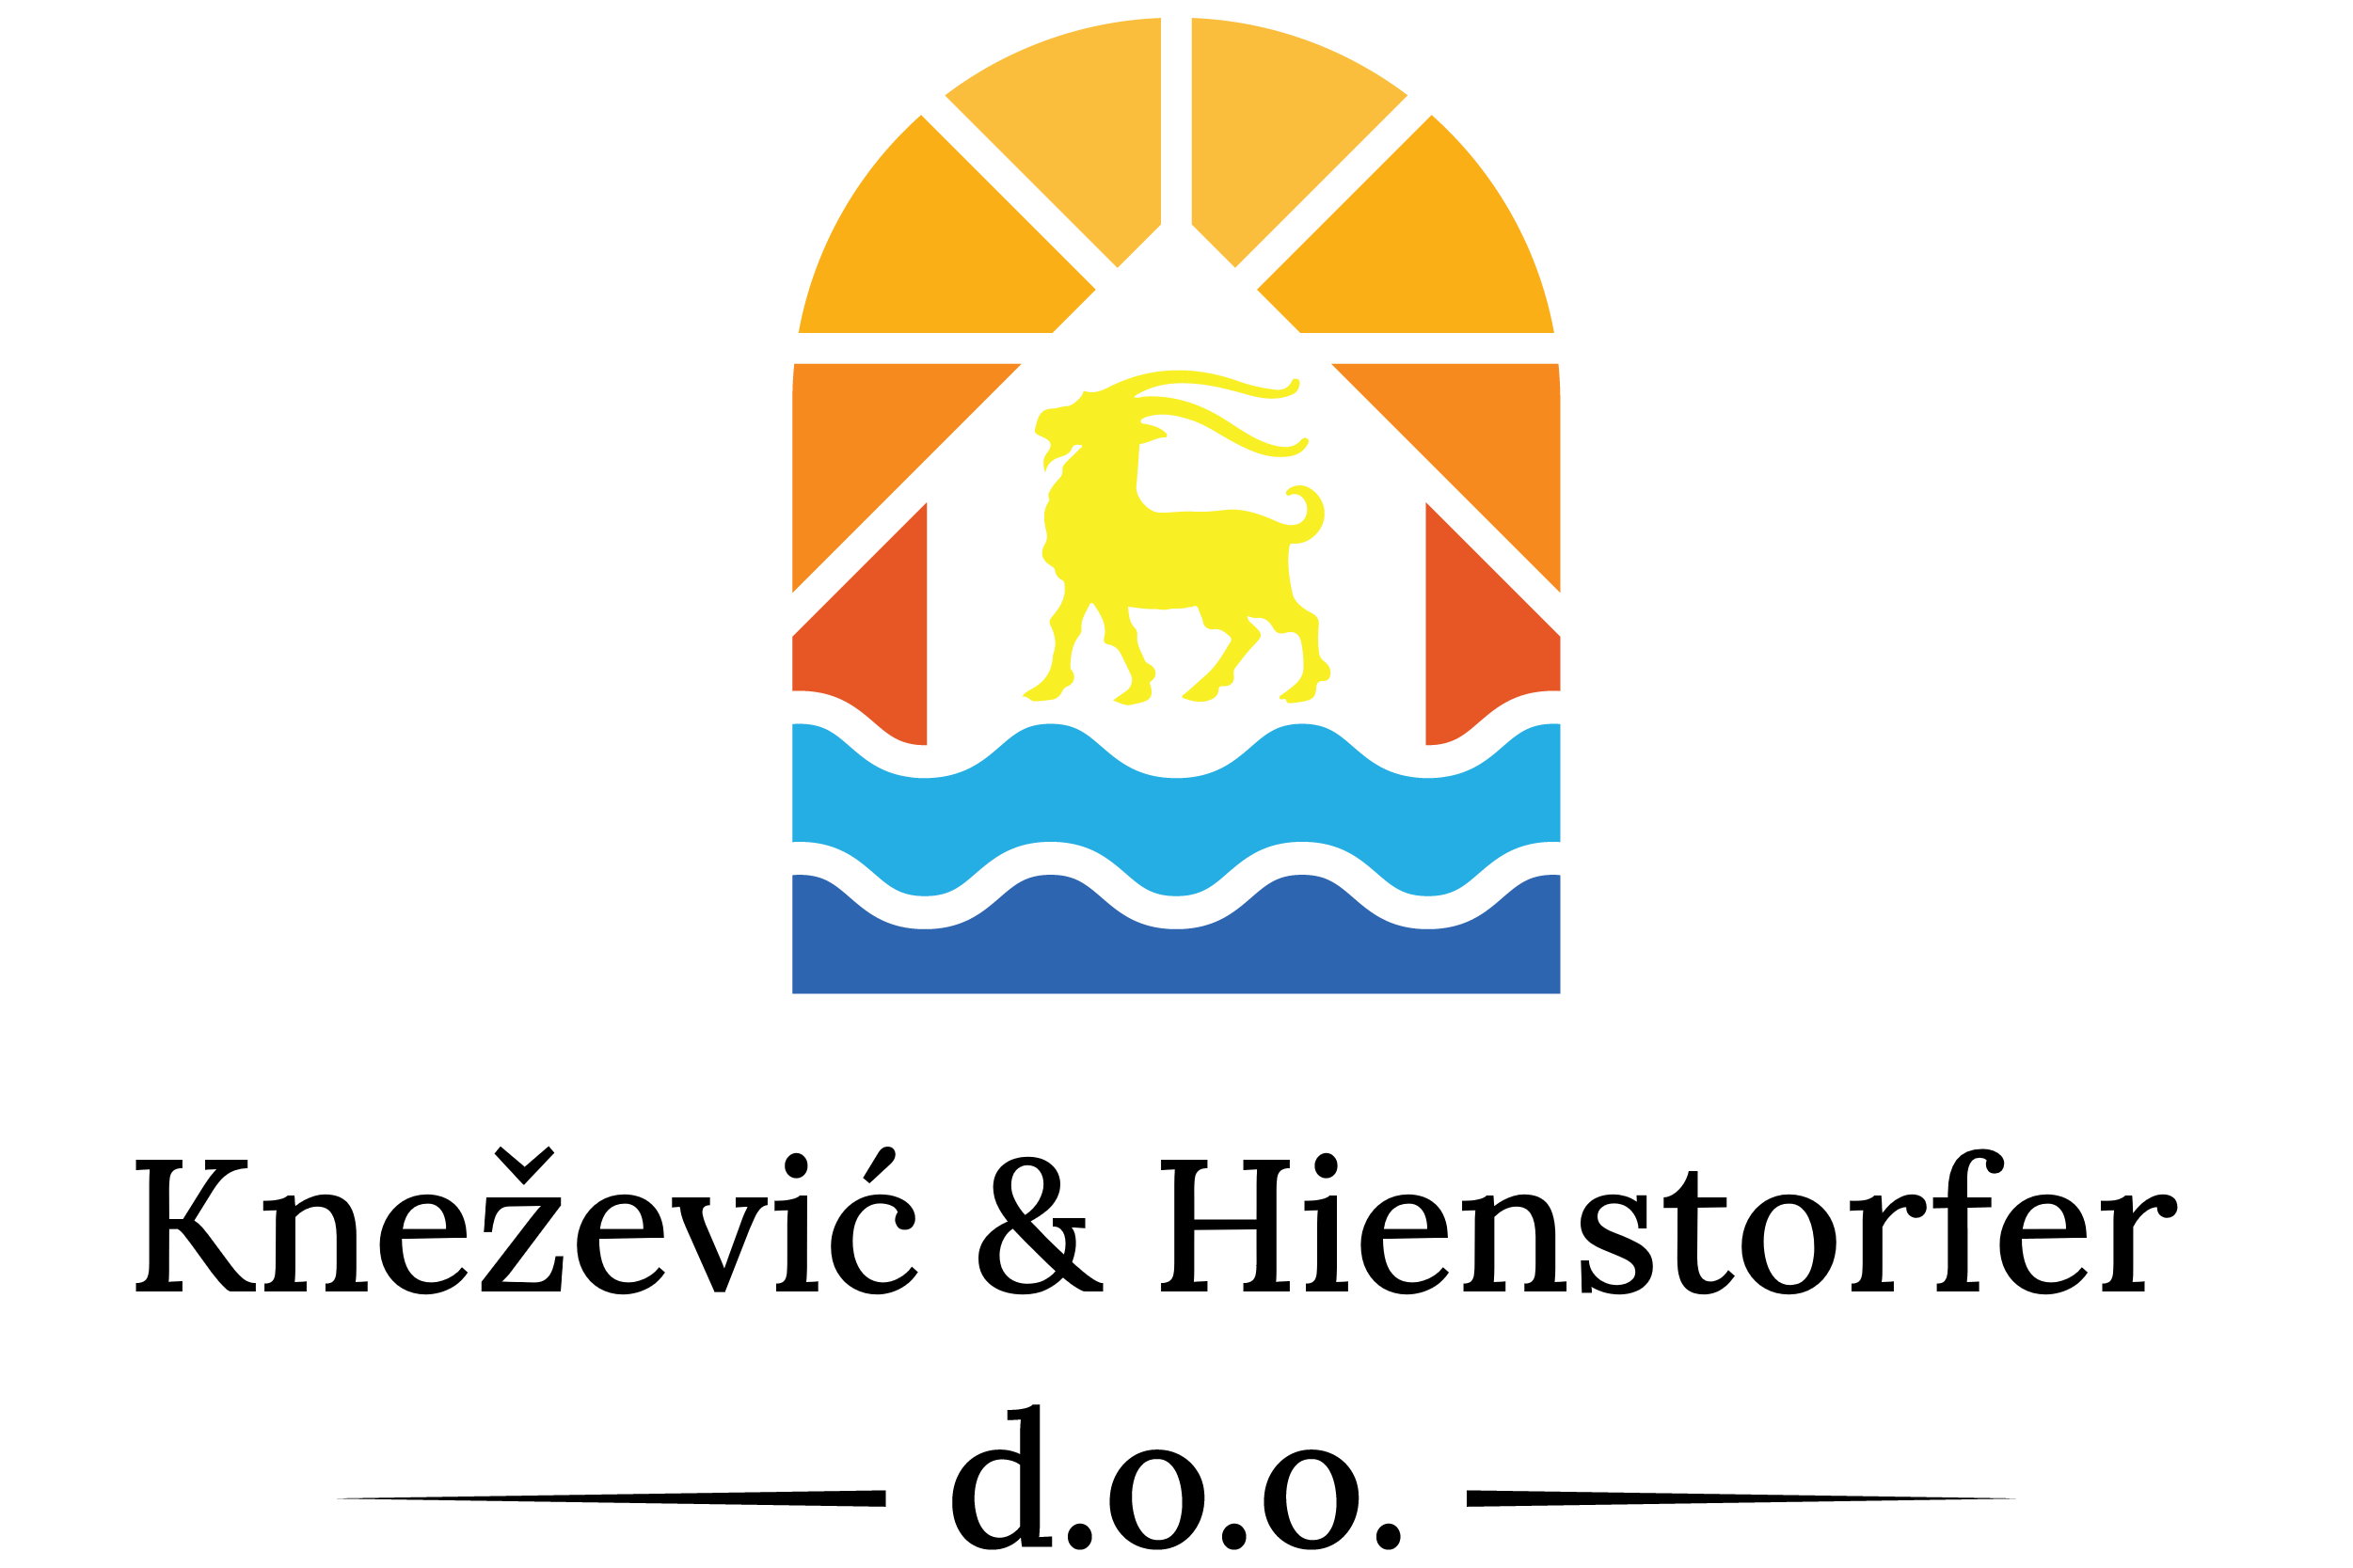 Knezevic & Hienstorfer d.o.o.